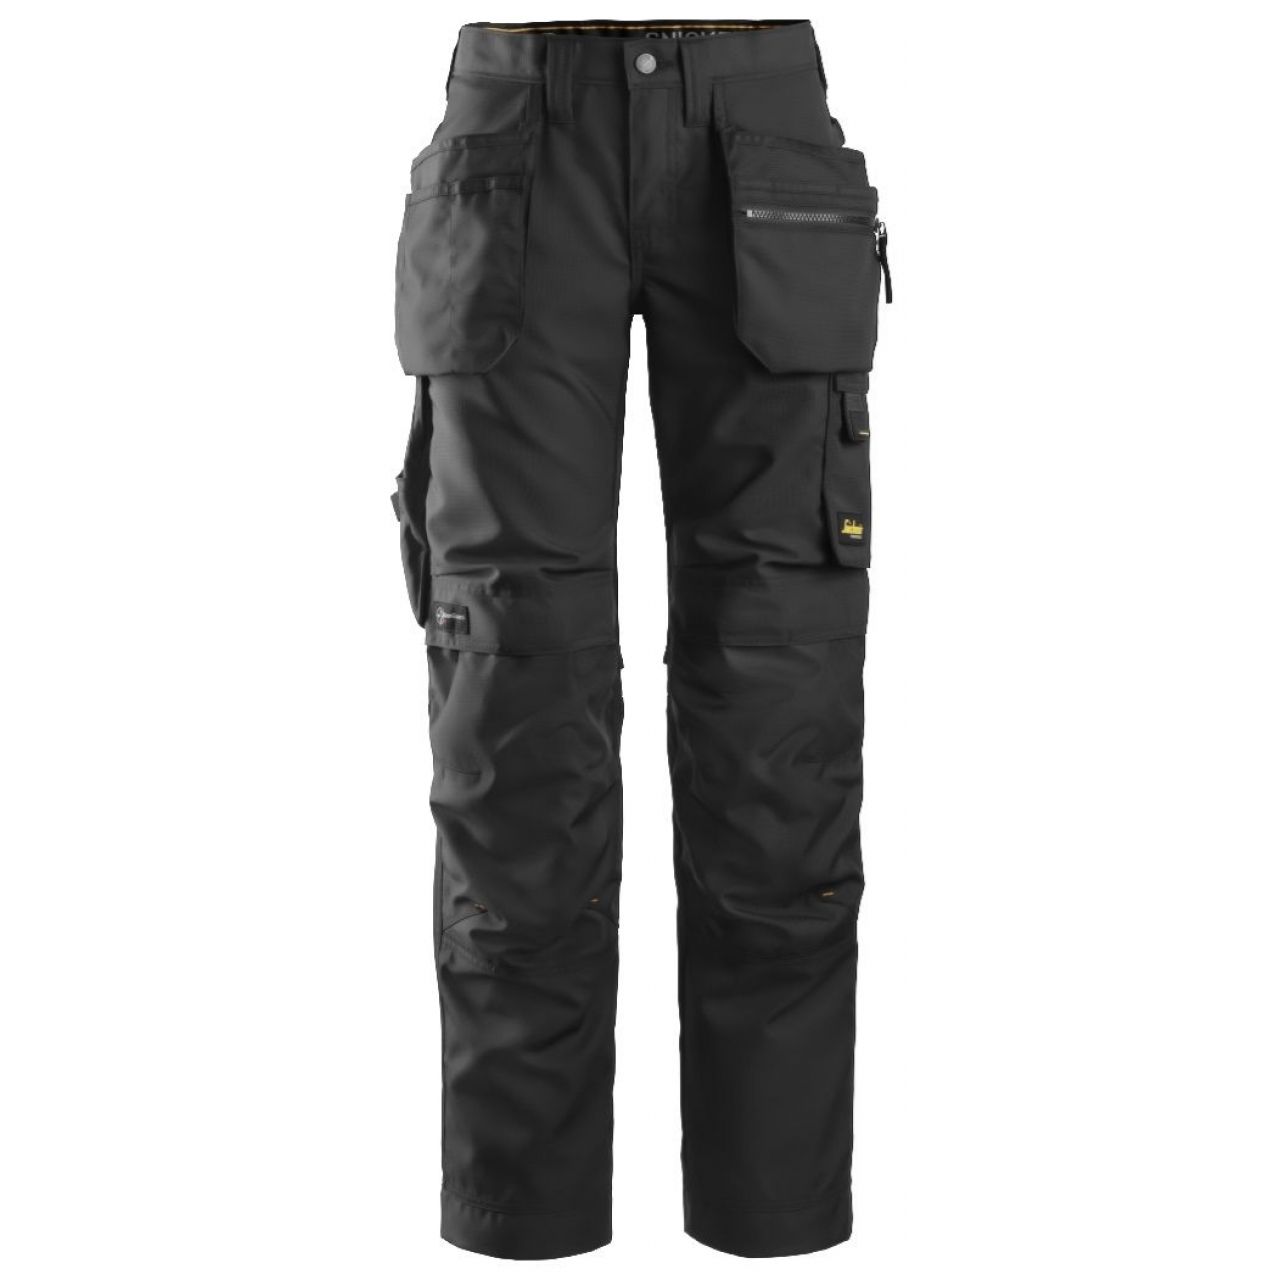 Pantalon de mujer AllroundWork+ con bolsillos flotantes negro talla 034